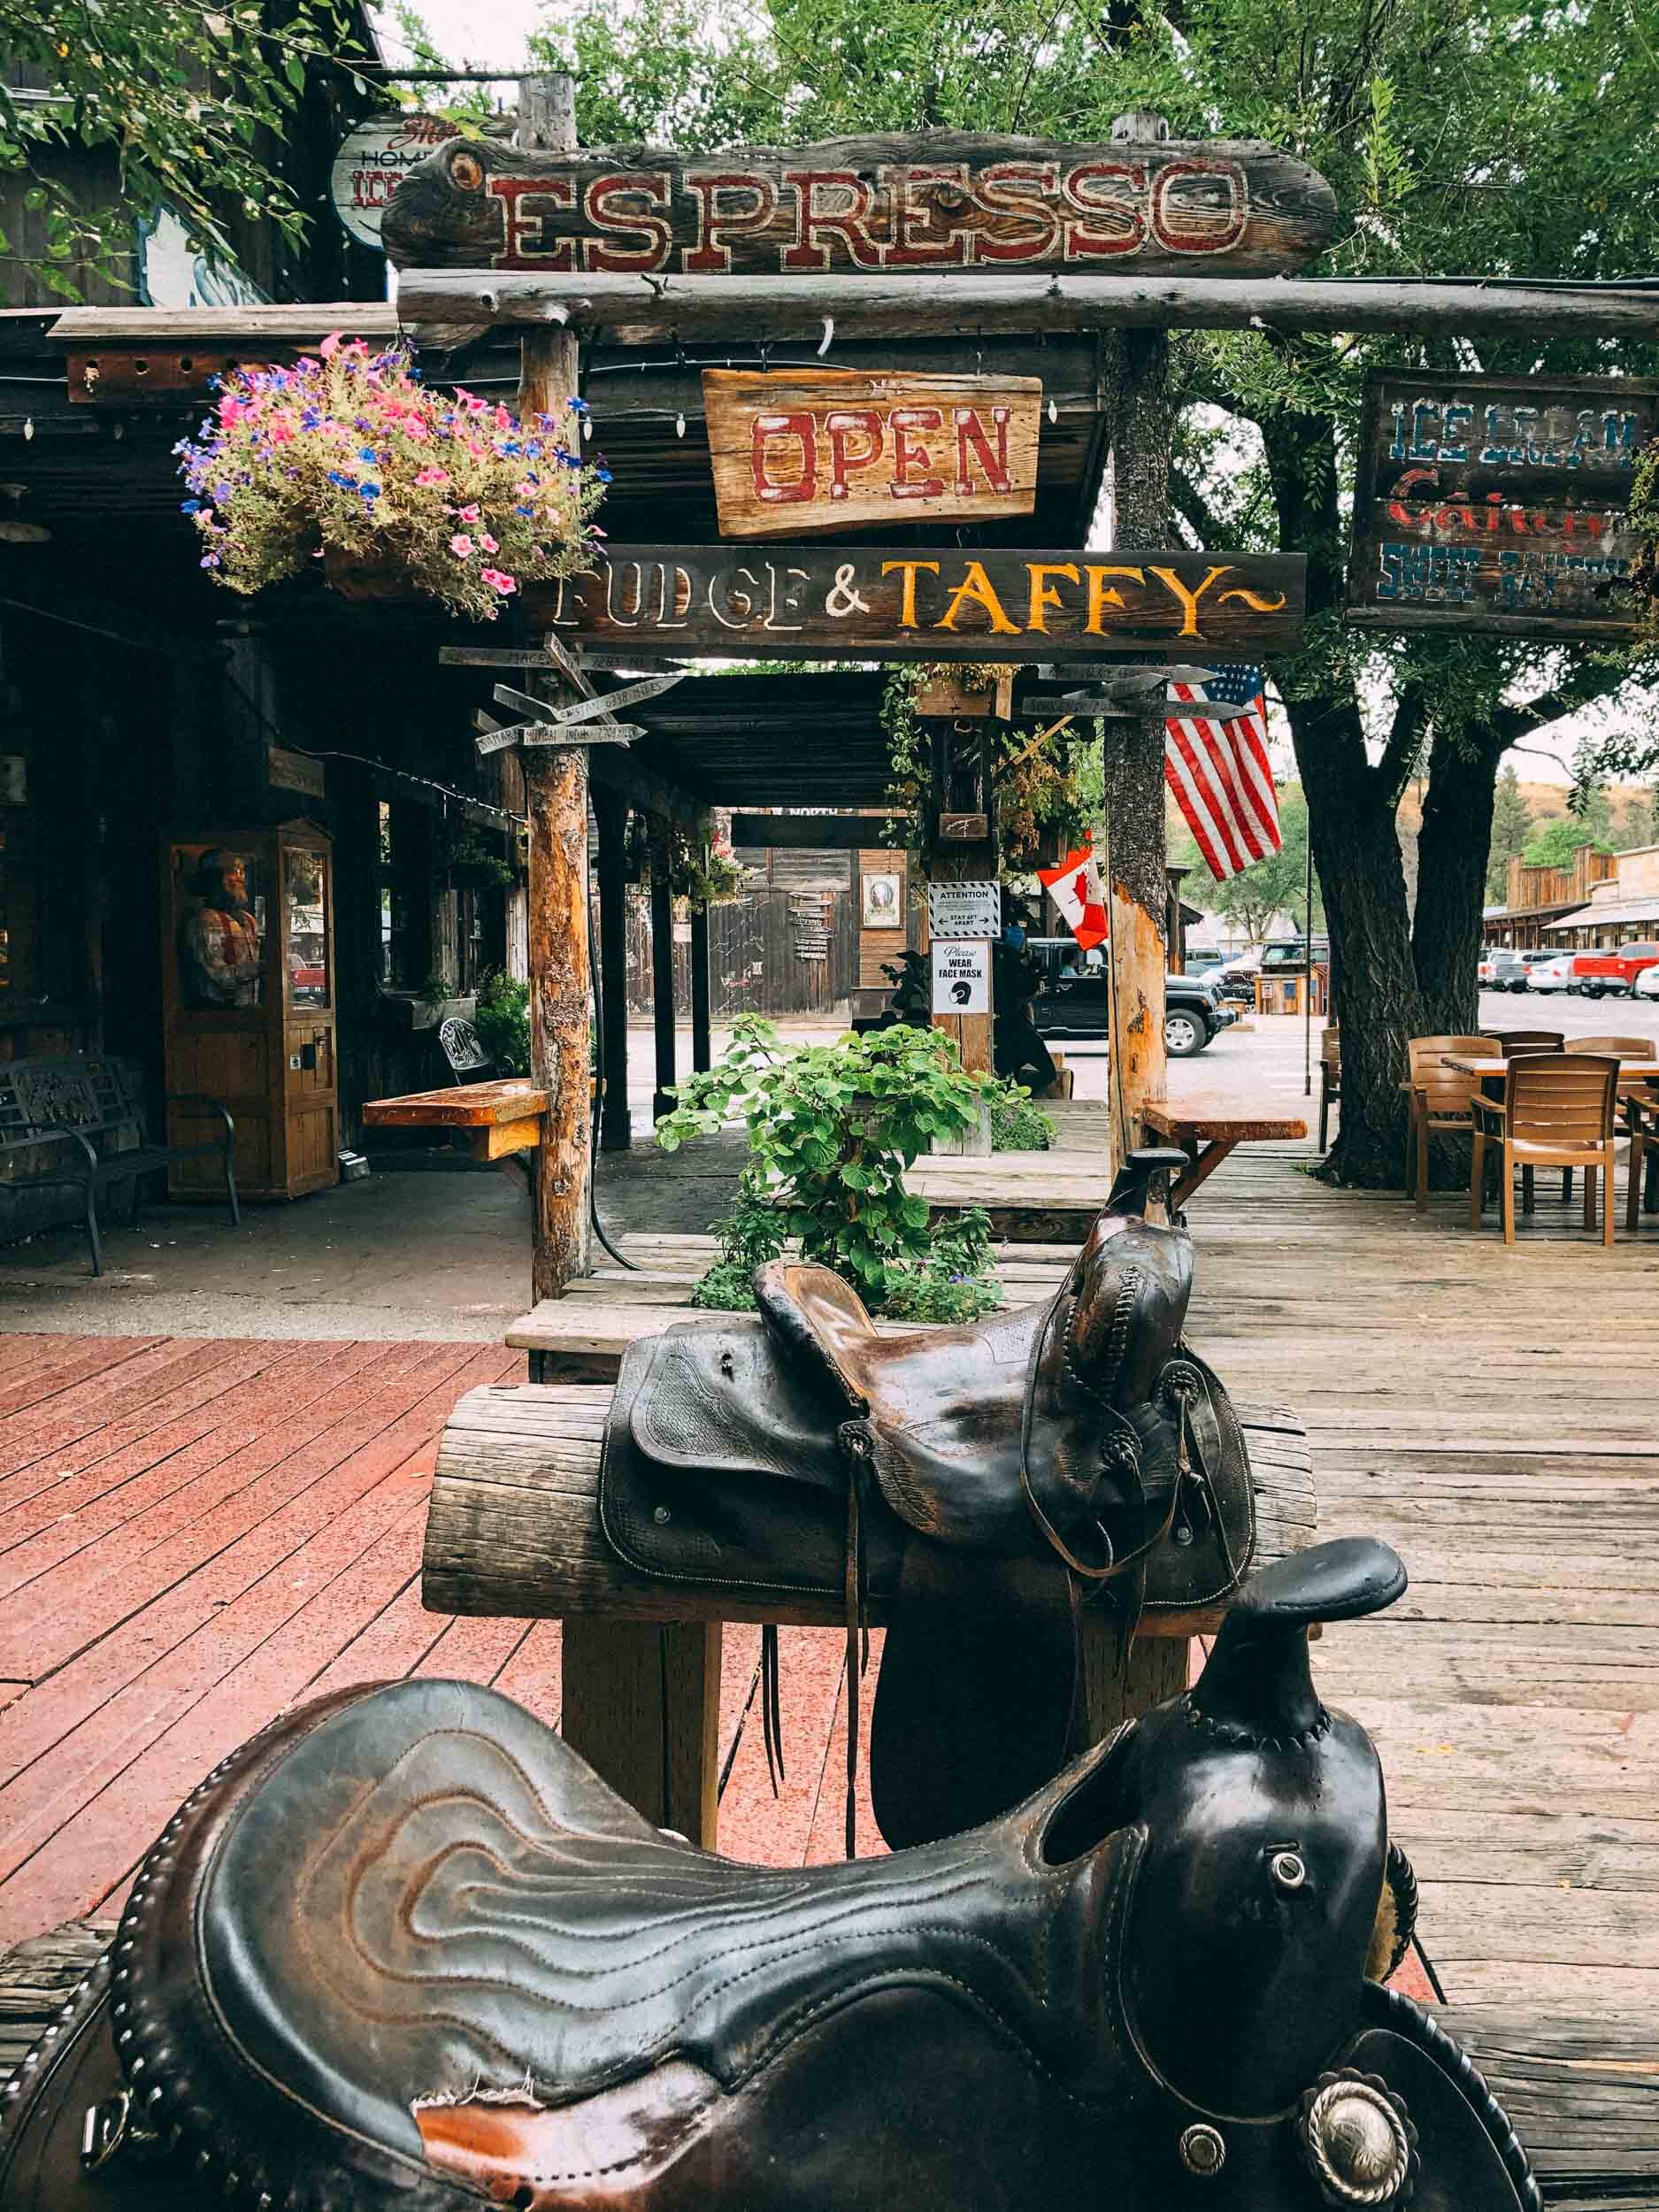 Winthrop’s main street features a fun western theme.